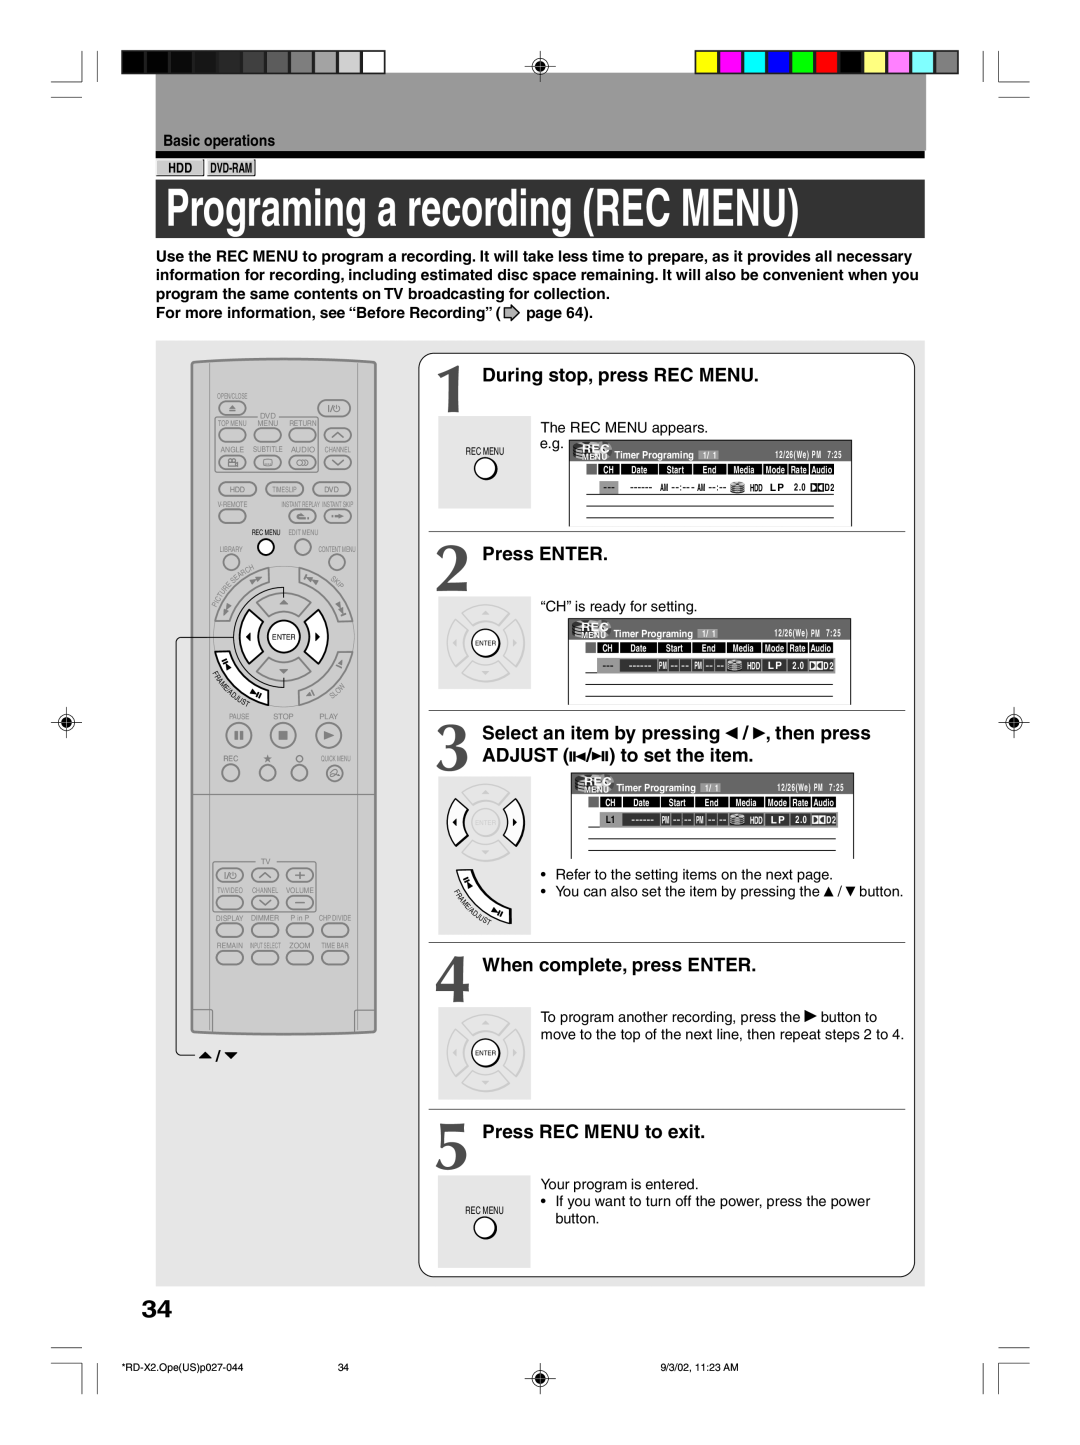 Toshiba RD-X2U Programing a recording REC MENU, During stop, press REC MENU, Press ENTER, Select an item by pressing, Date 